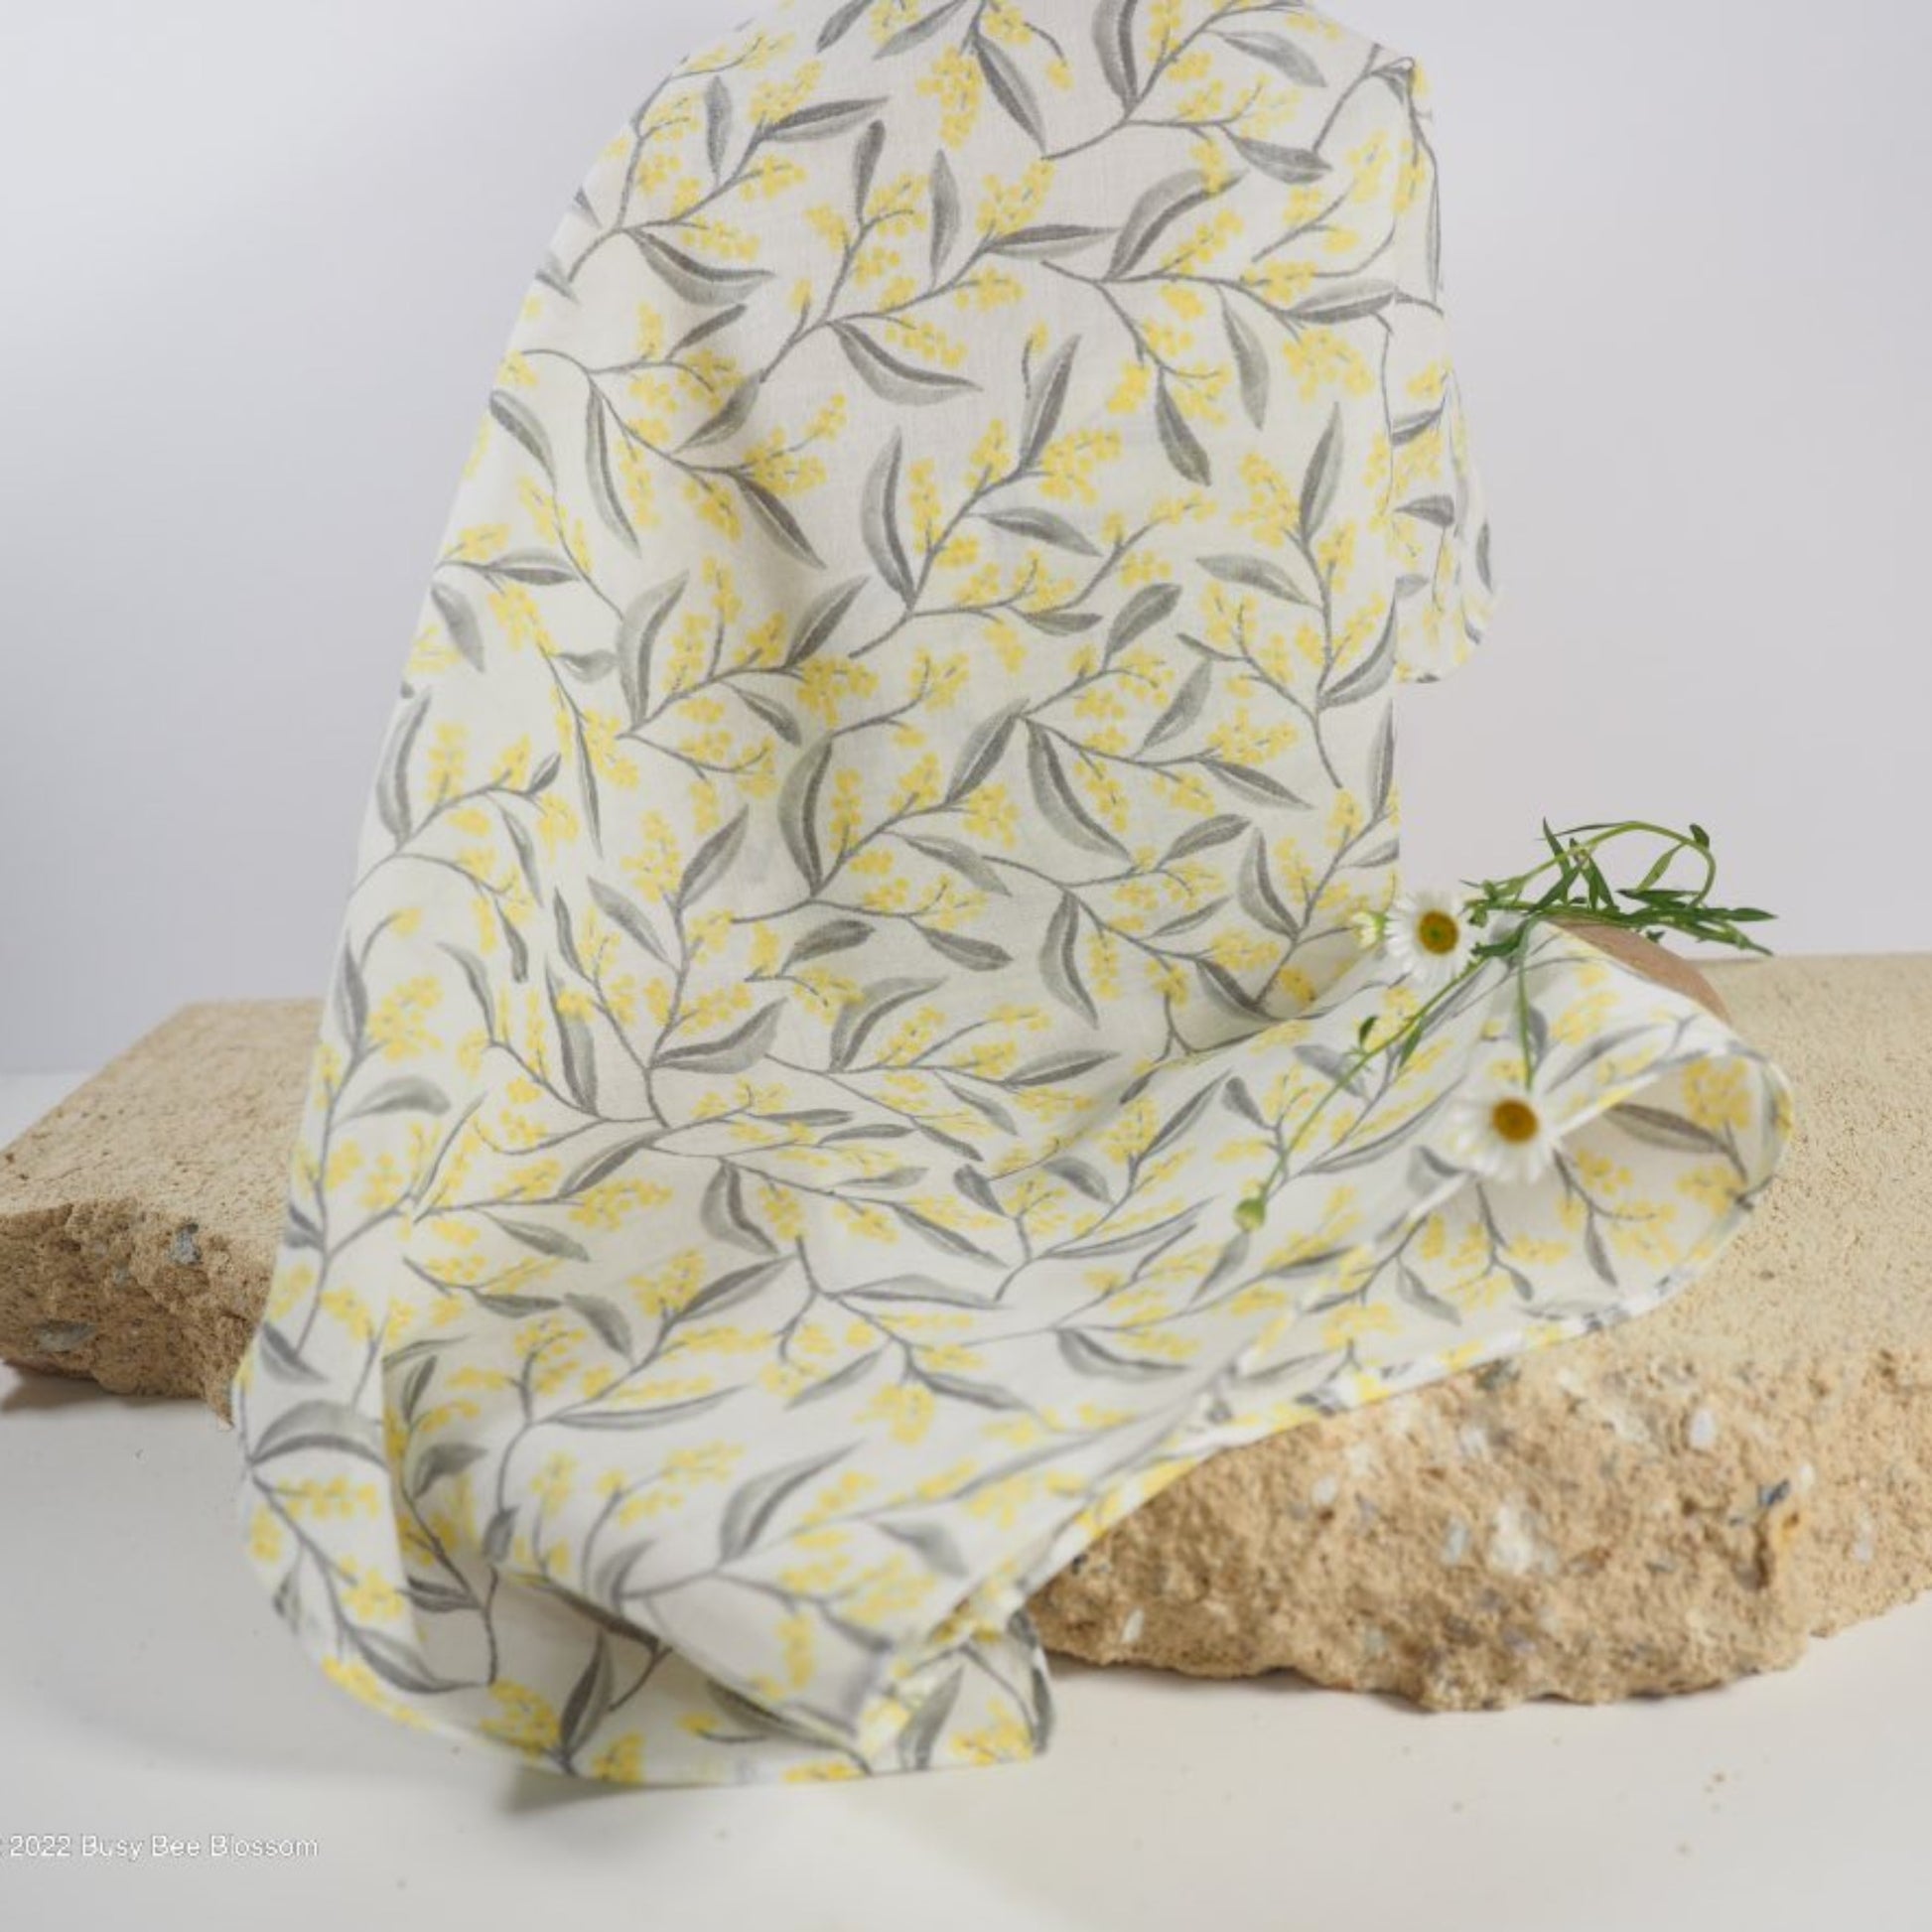 Handmade organic cotton  muslin face cloth in wattle flower pattern